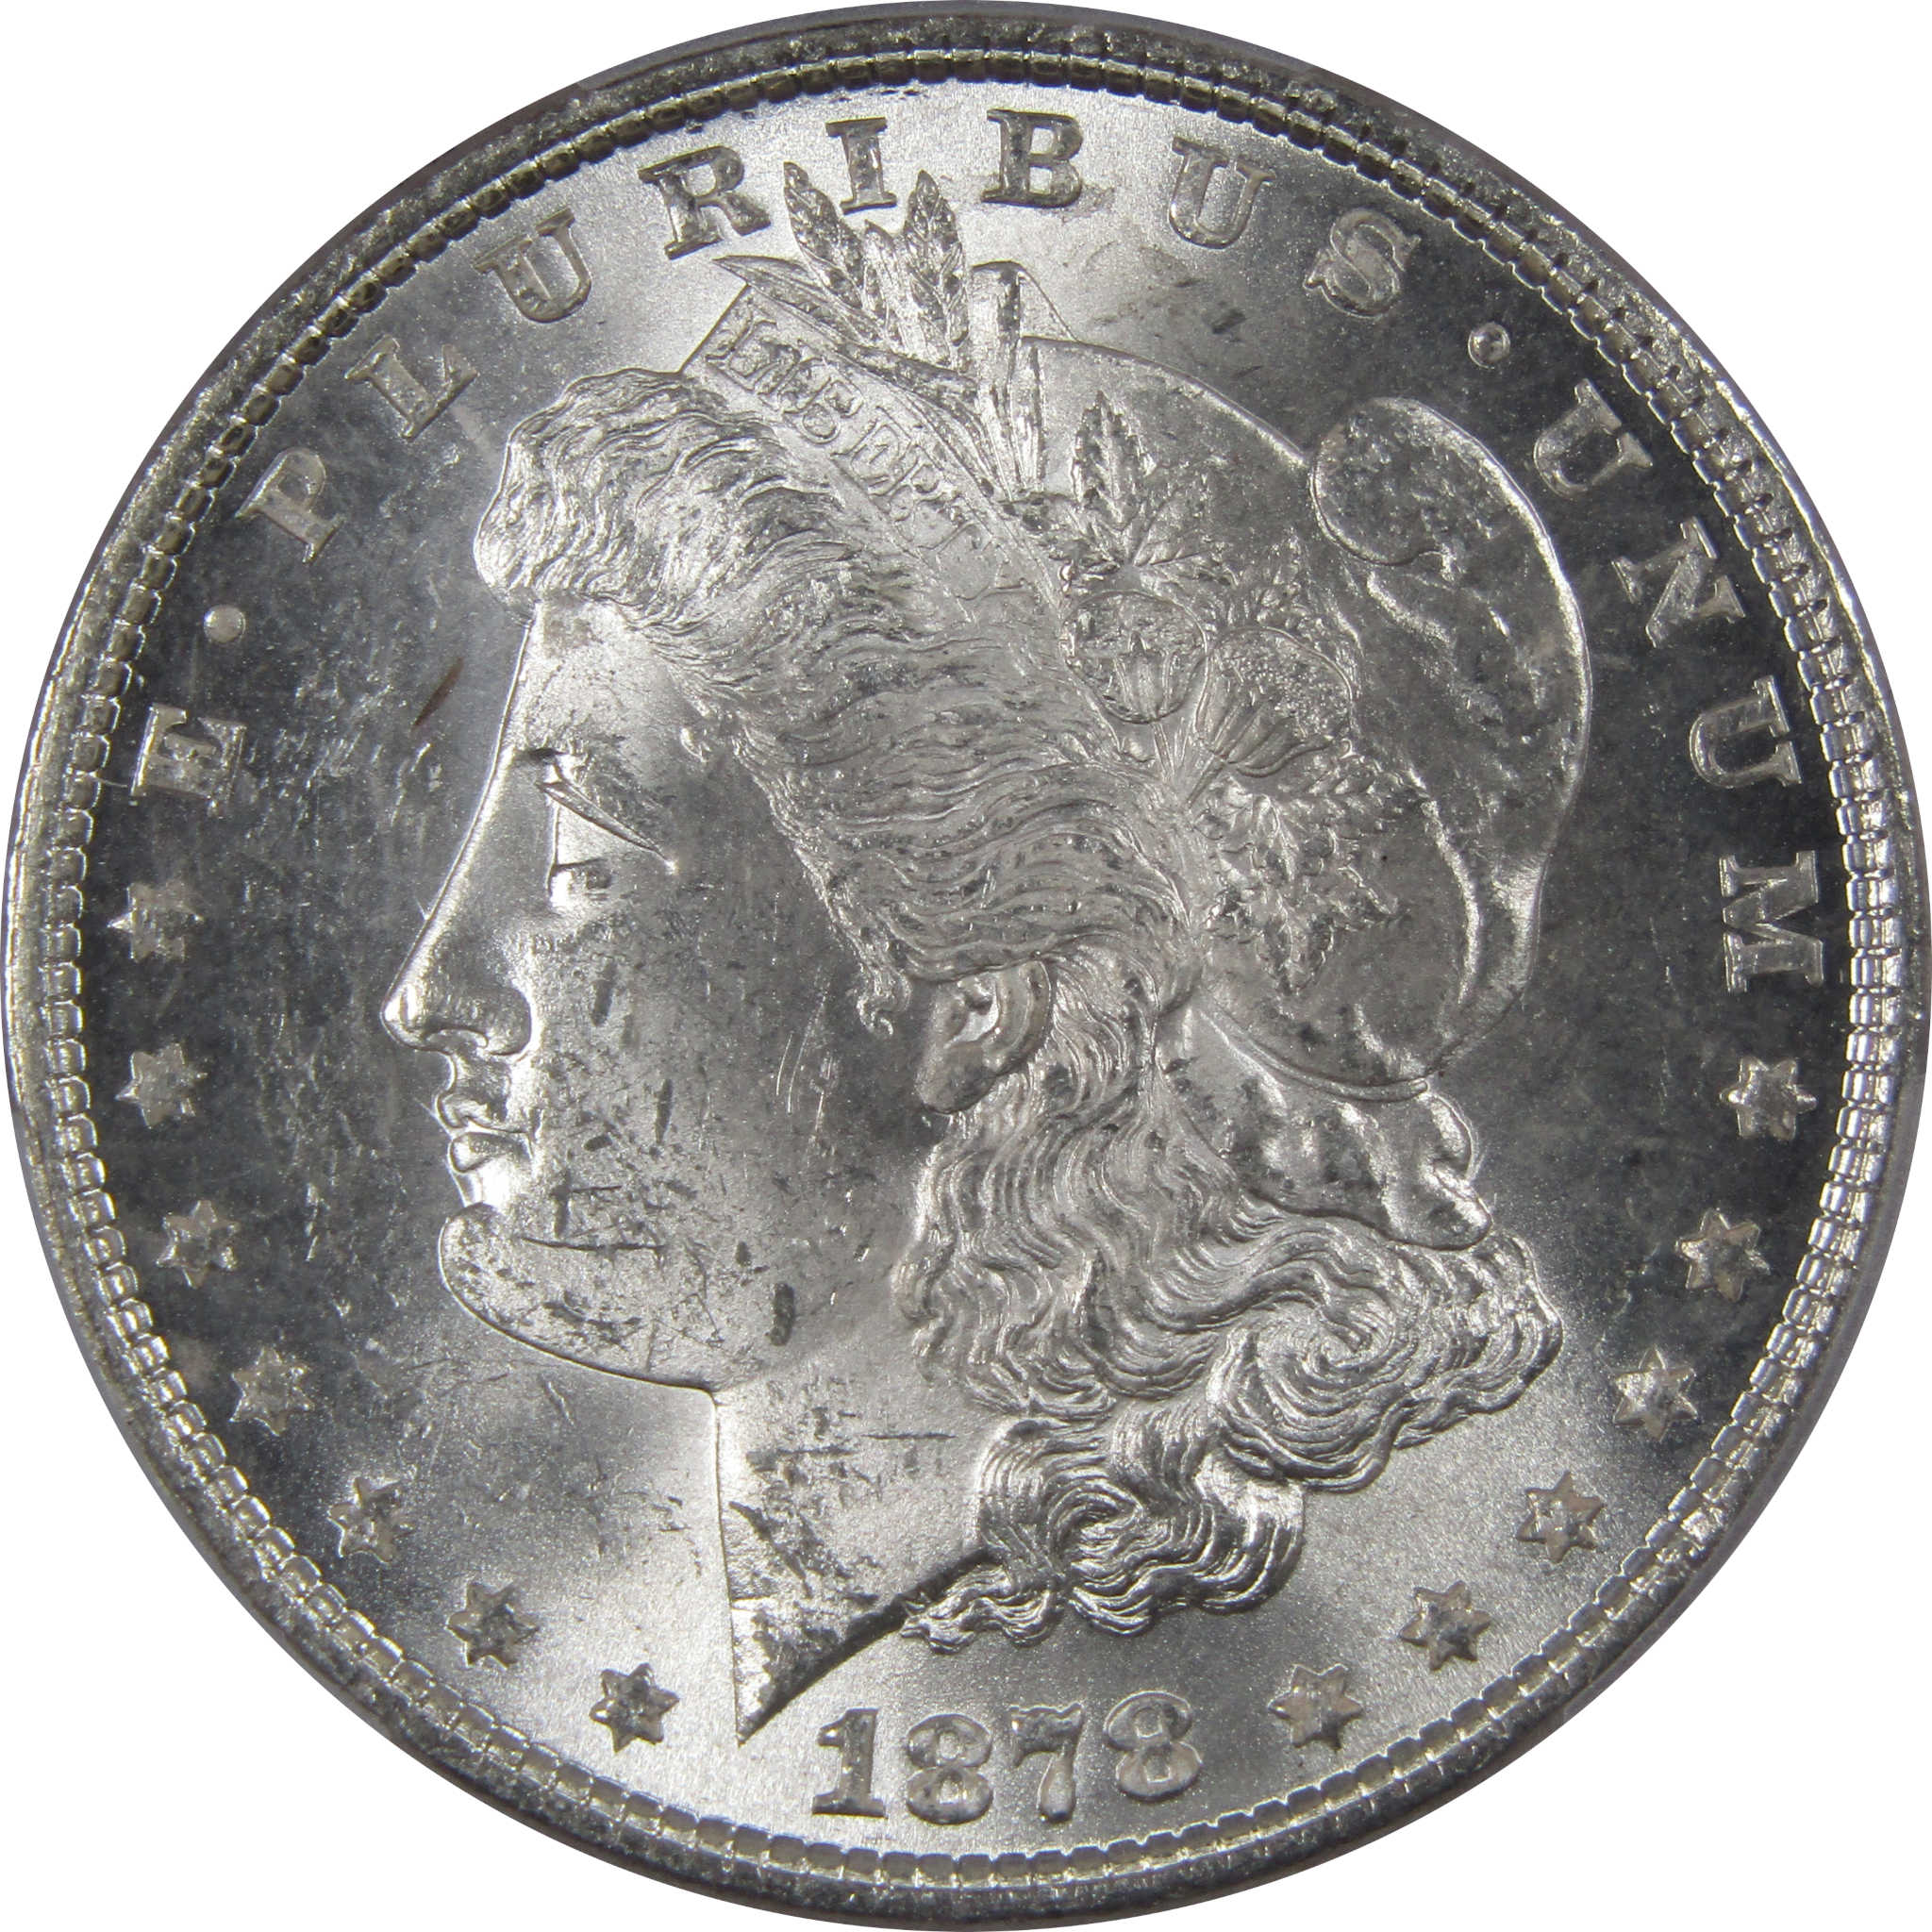 1878 7TF Rev 79 Morgan Dollar MS 62 PCGS Silver SKU:IPC6194 - Morgan coin - Morgan silver dollar - Morgan silver dollar for sale - Profile Coins &amp; Collectibles